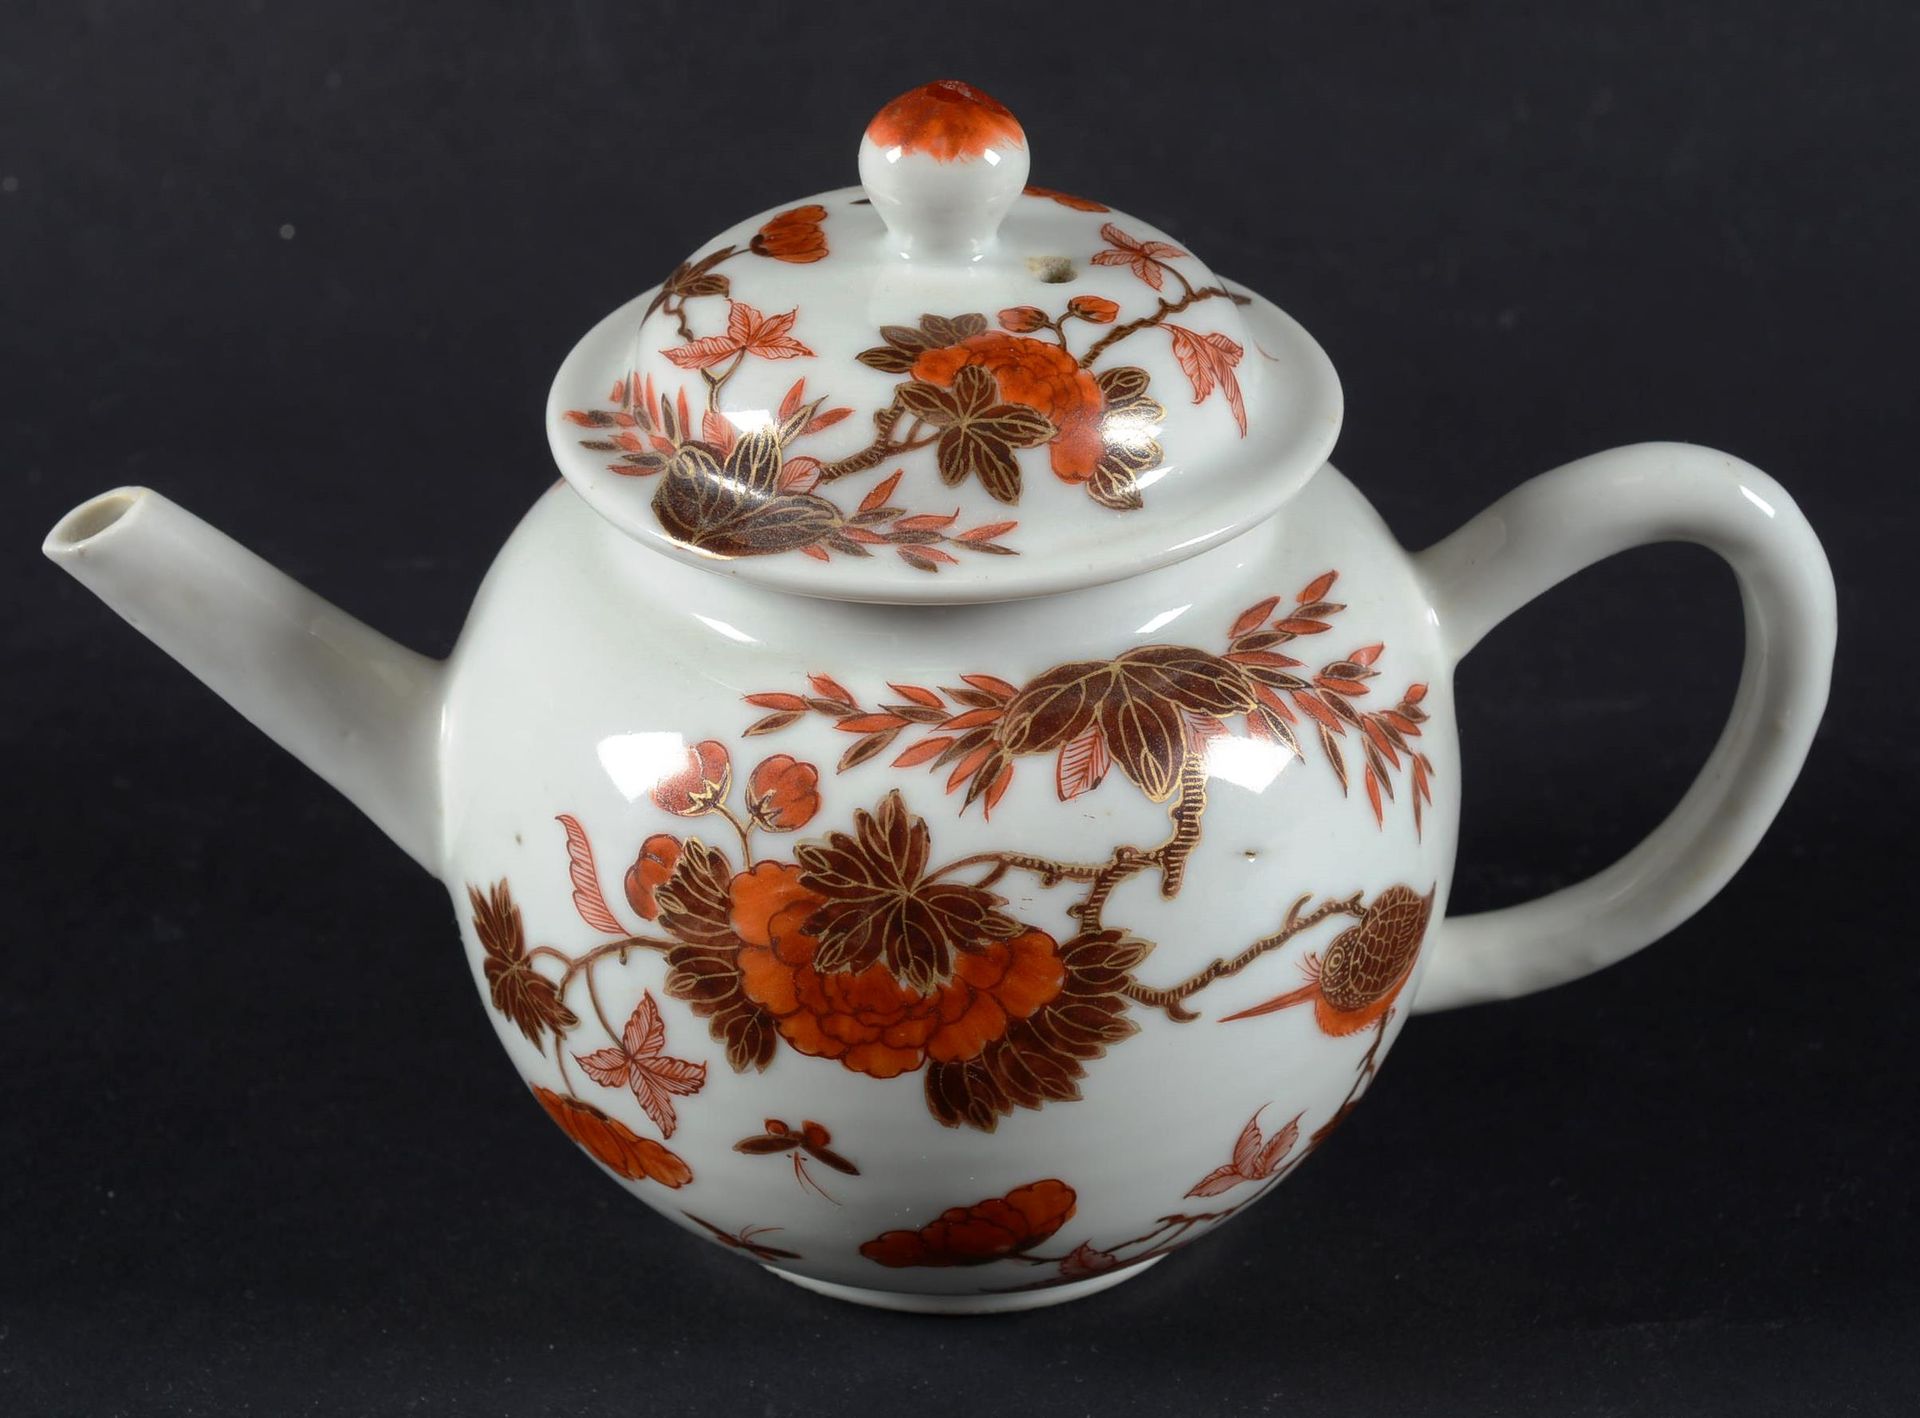 Théière en porcelaine de Chine 中国。

中国瓷器茶壶，装饰有花卷、鸟和昆虫。18世纪。

高：14厘米